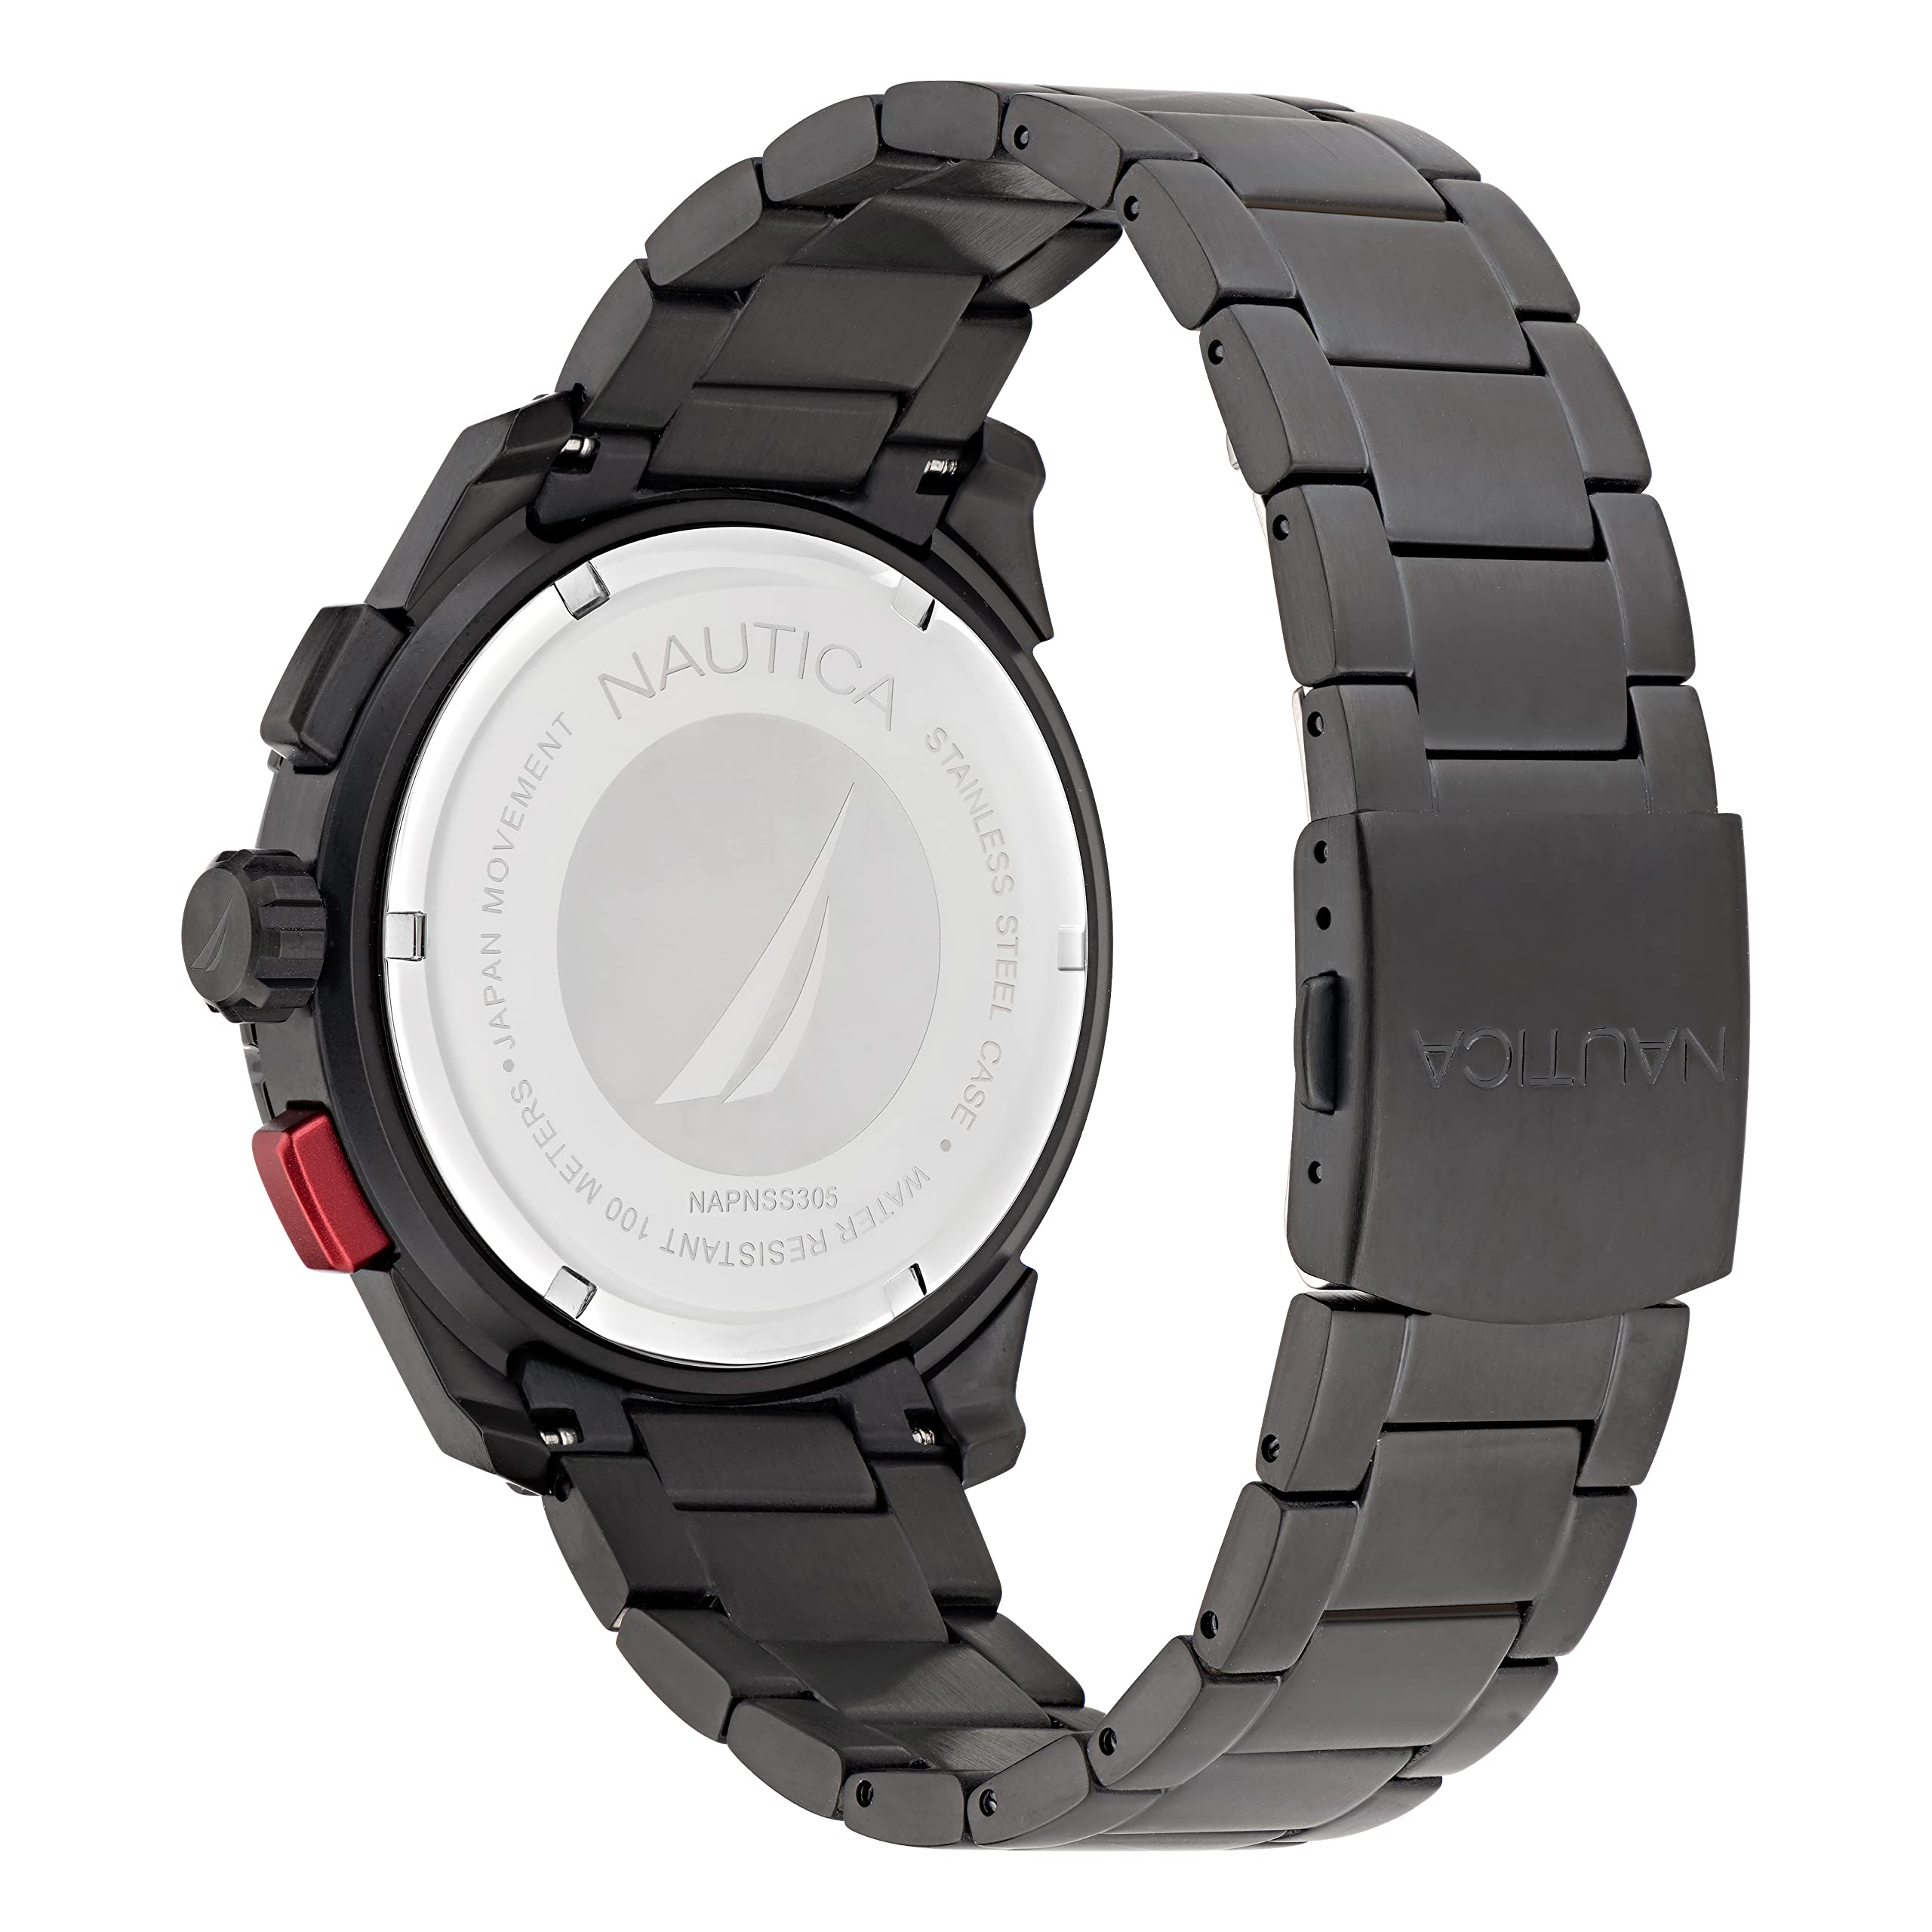 Nautica Men's NAPNSS305 NST 101 IP Black Recycled (85%) Stainless Steel Bracelet Watch